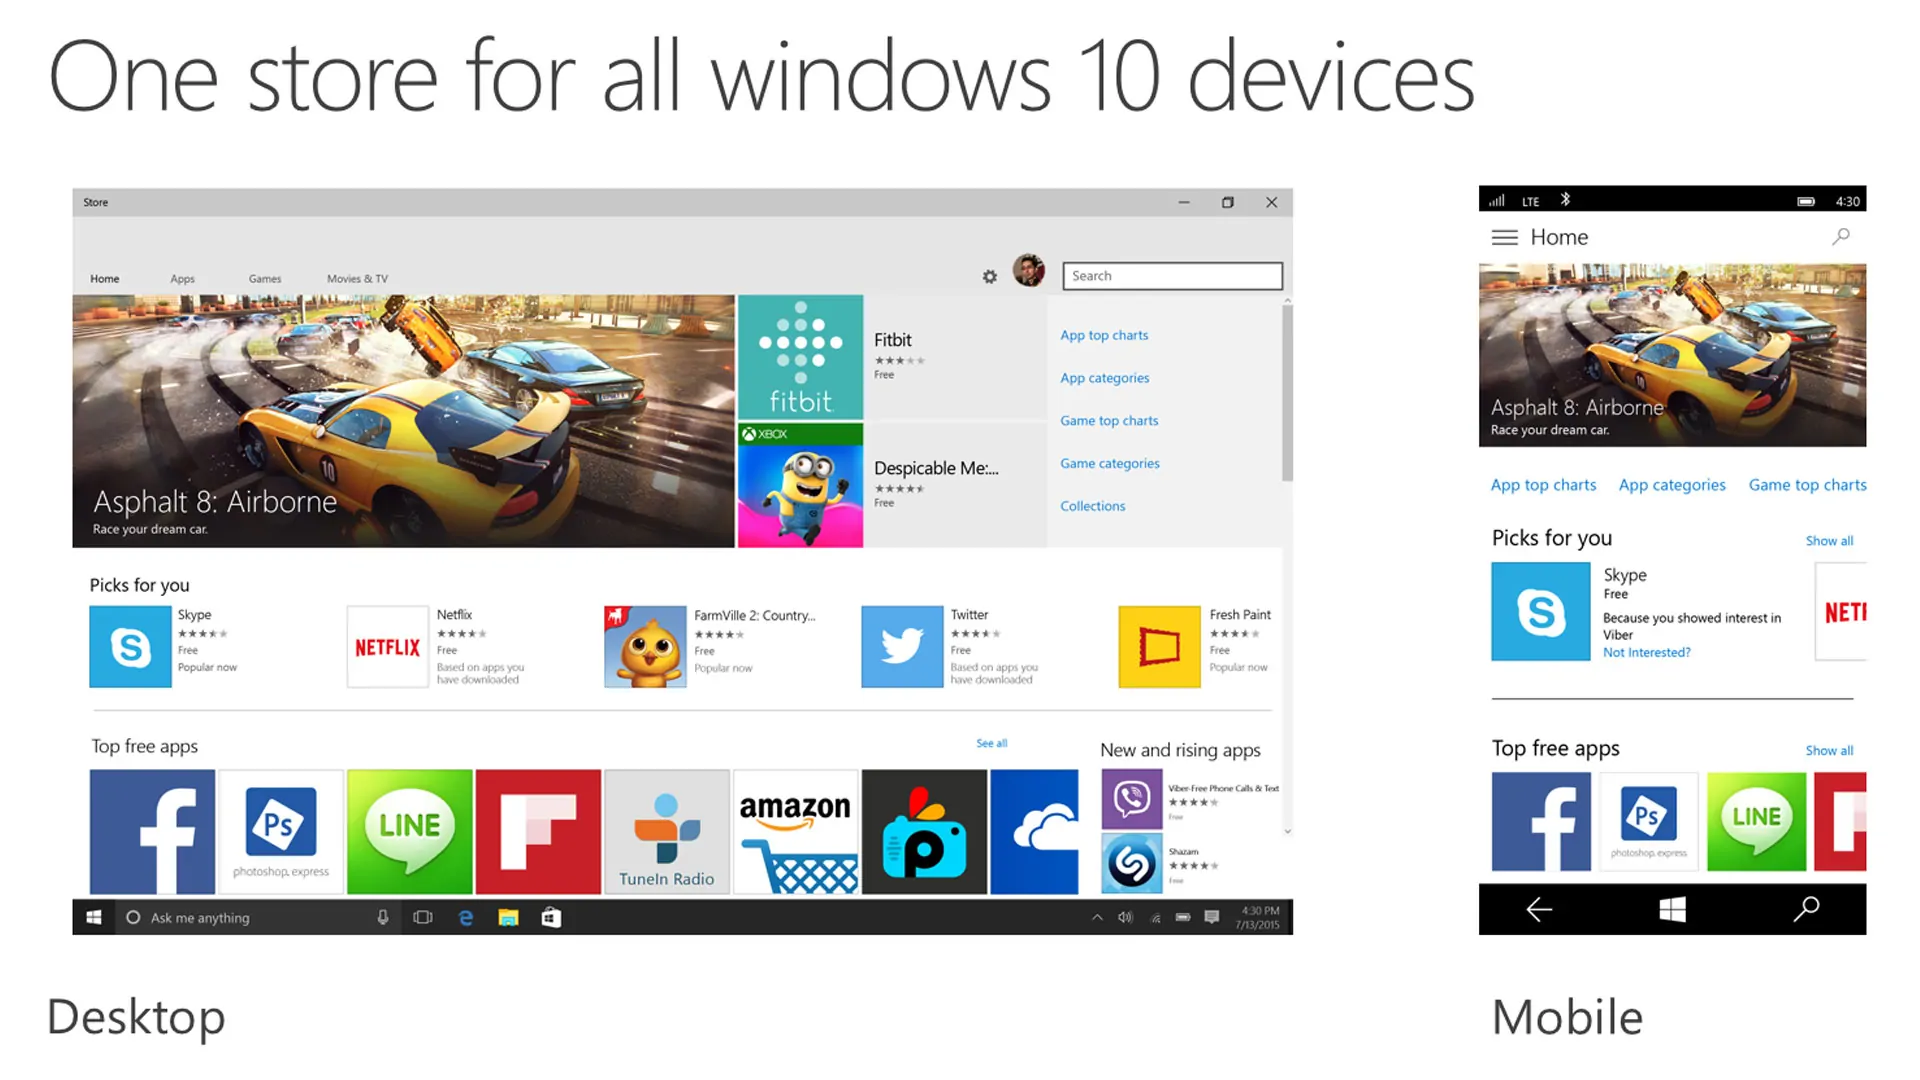 Windows 10 application development store for UWP apps